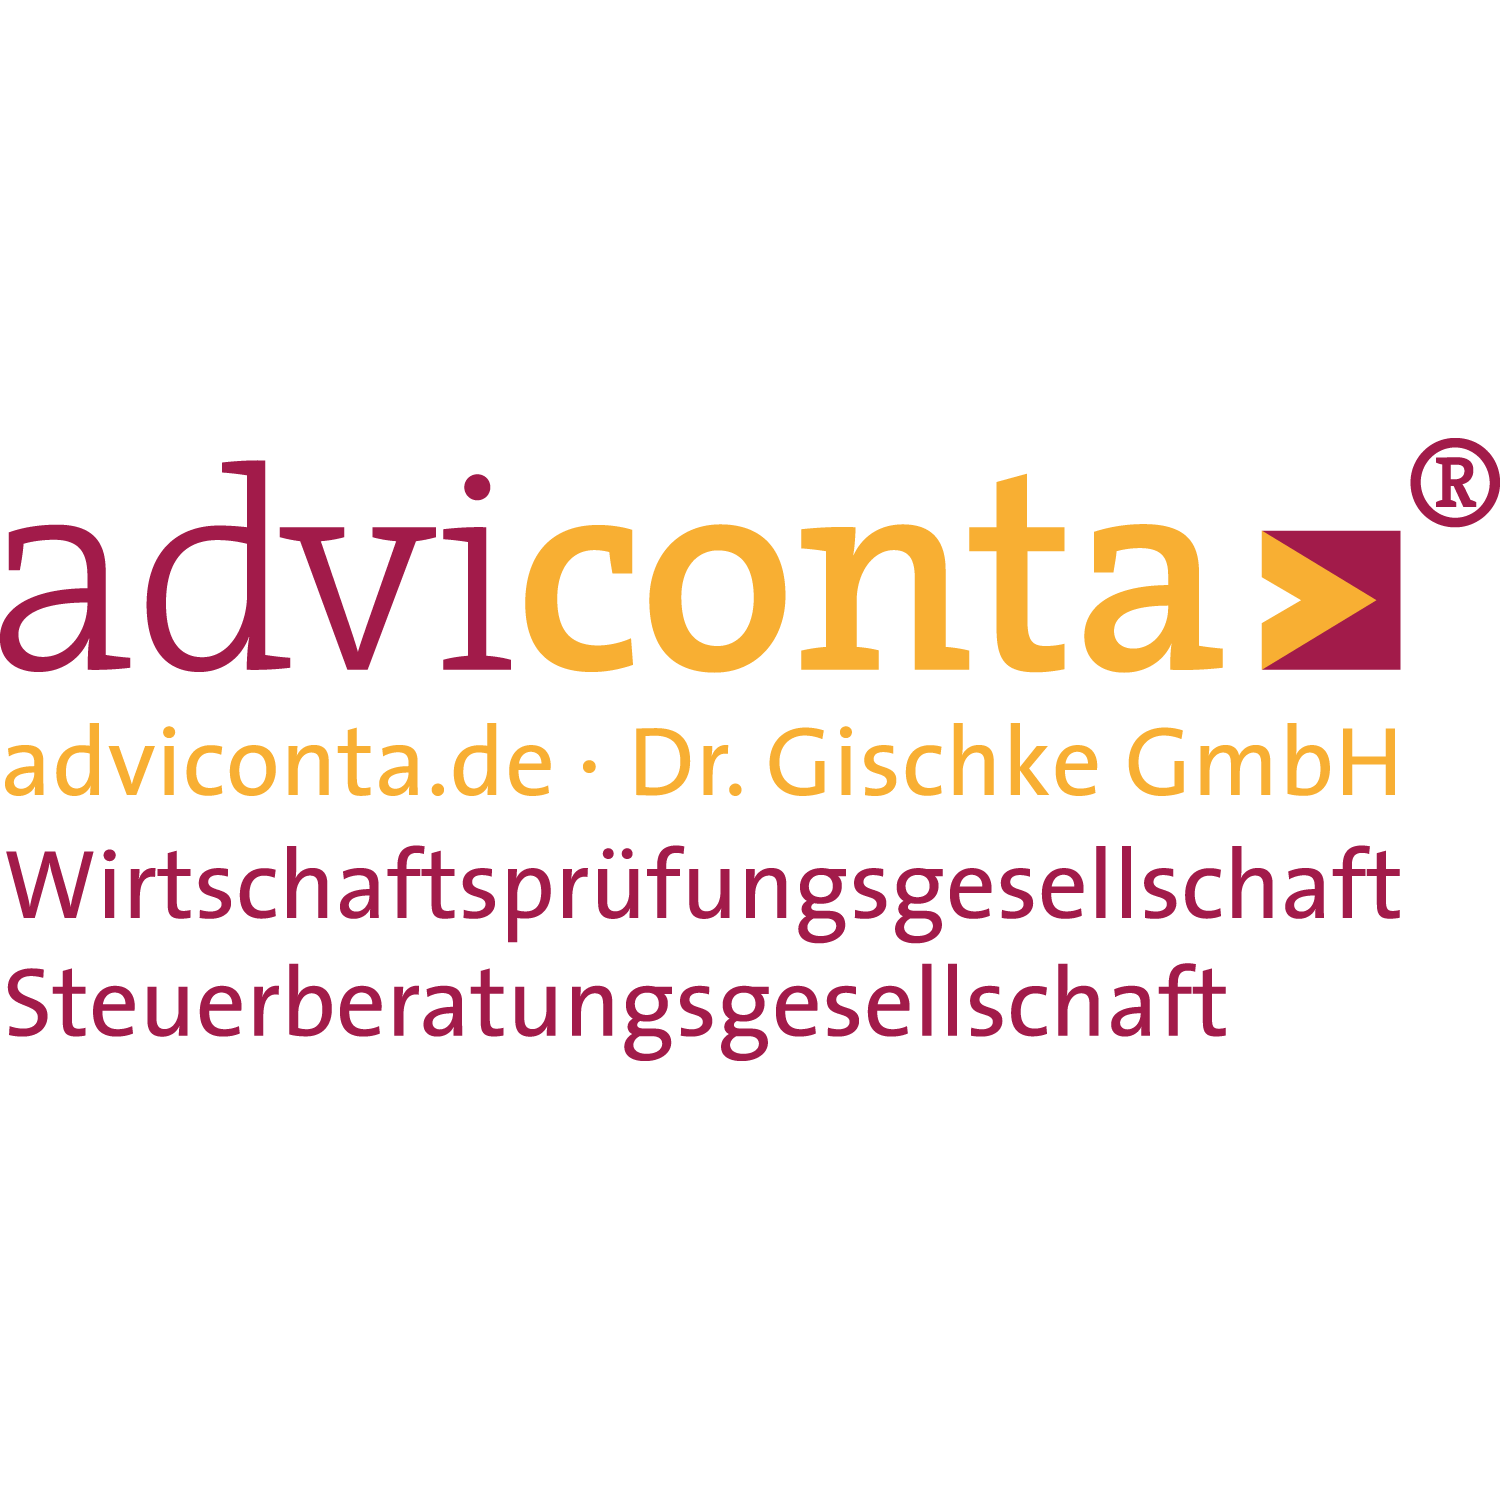 Logo adviconta.de Dr. Gischke GmbH